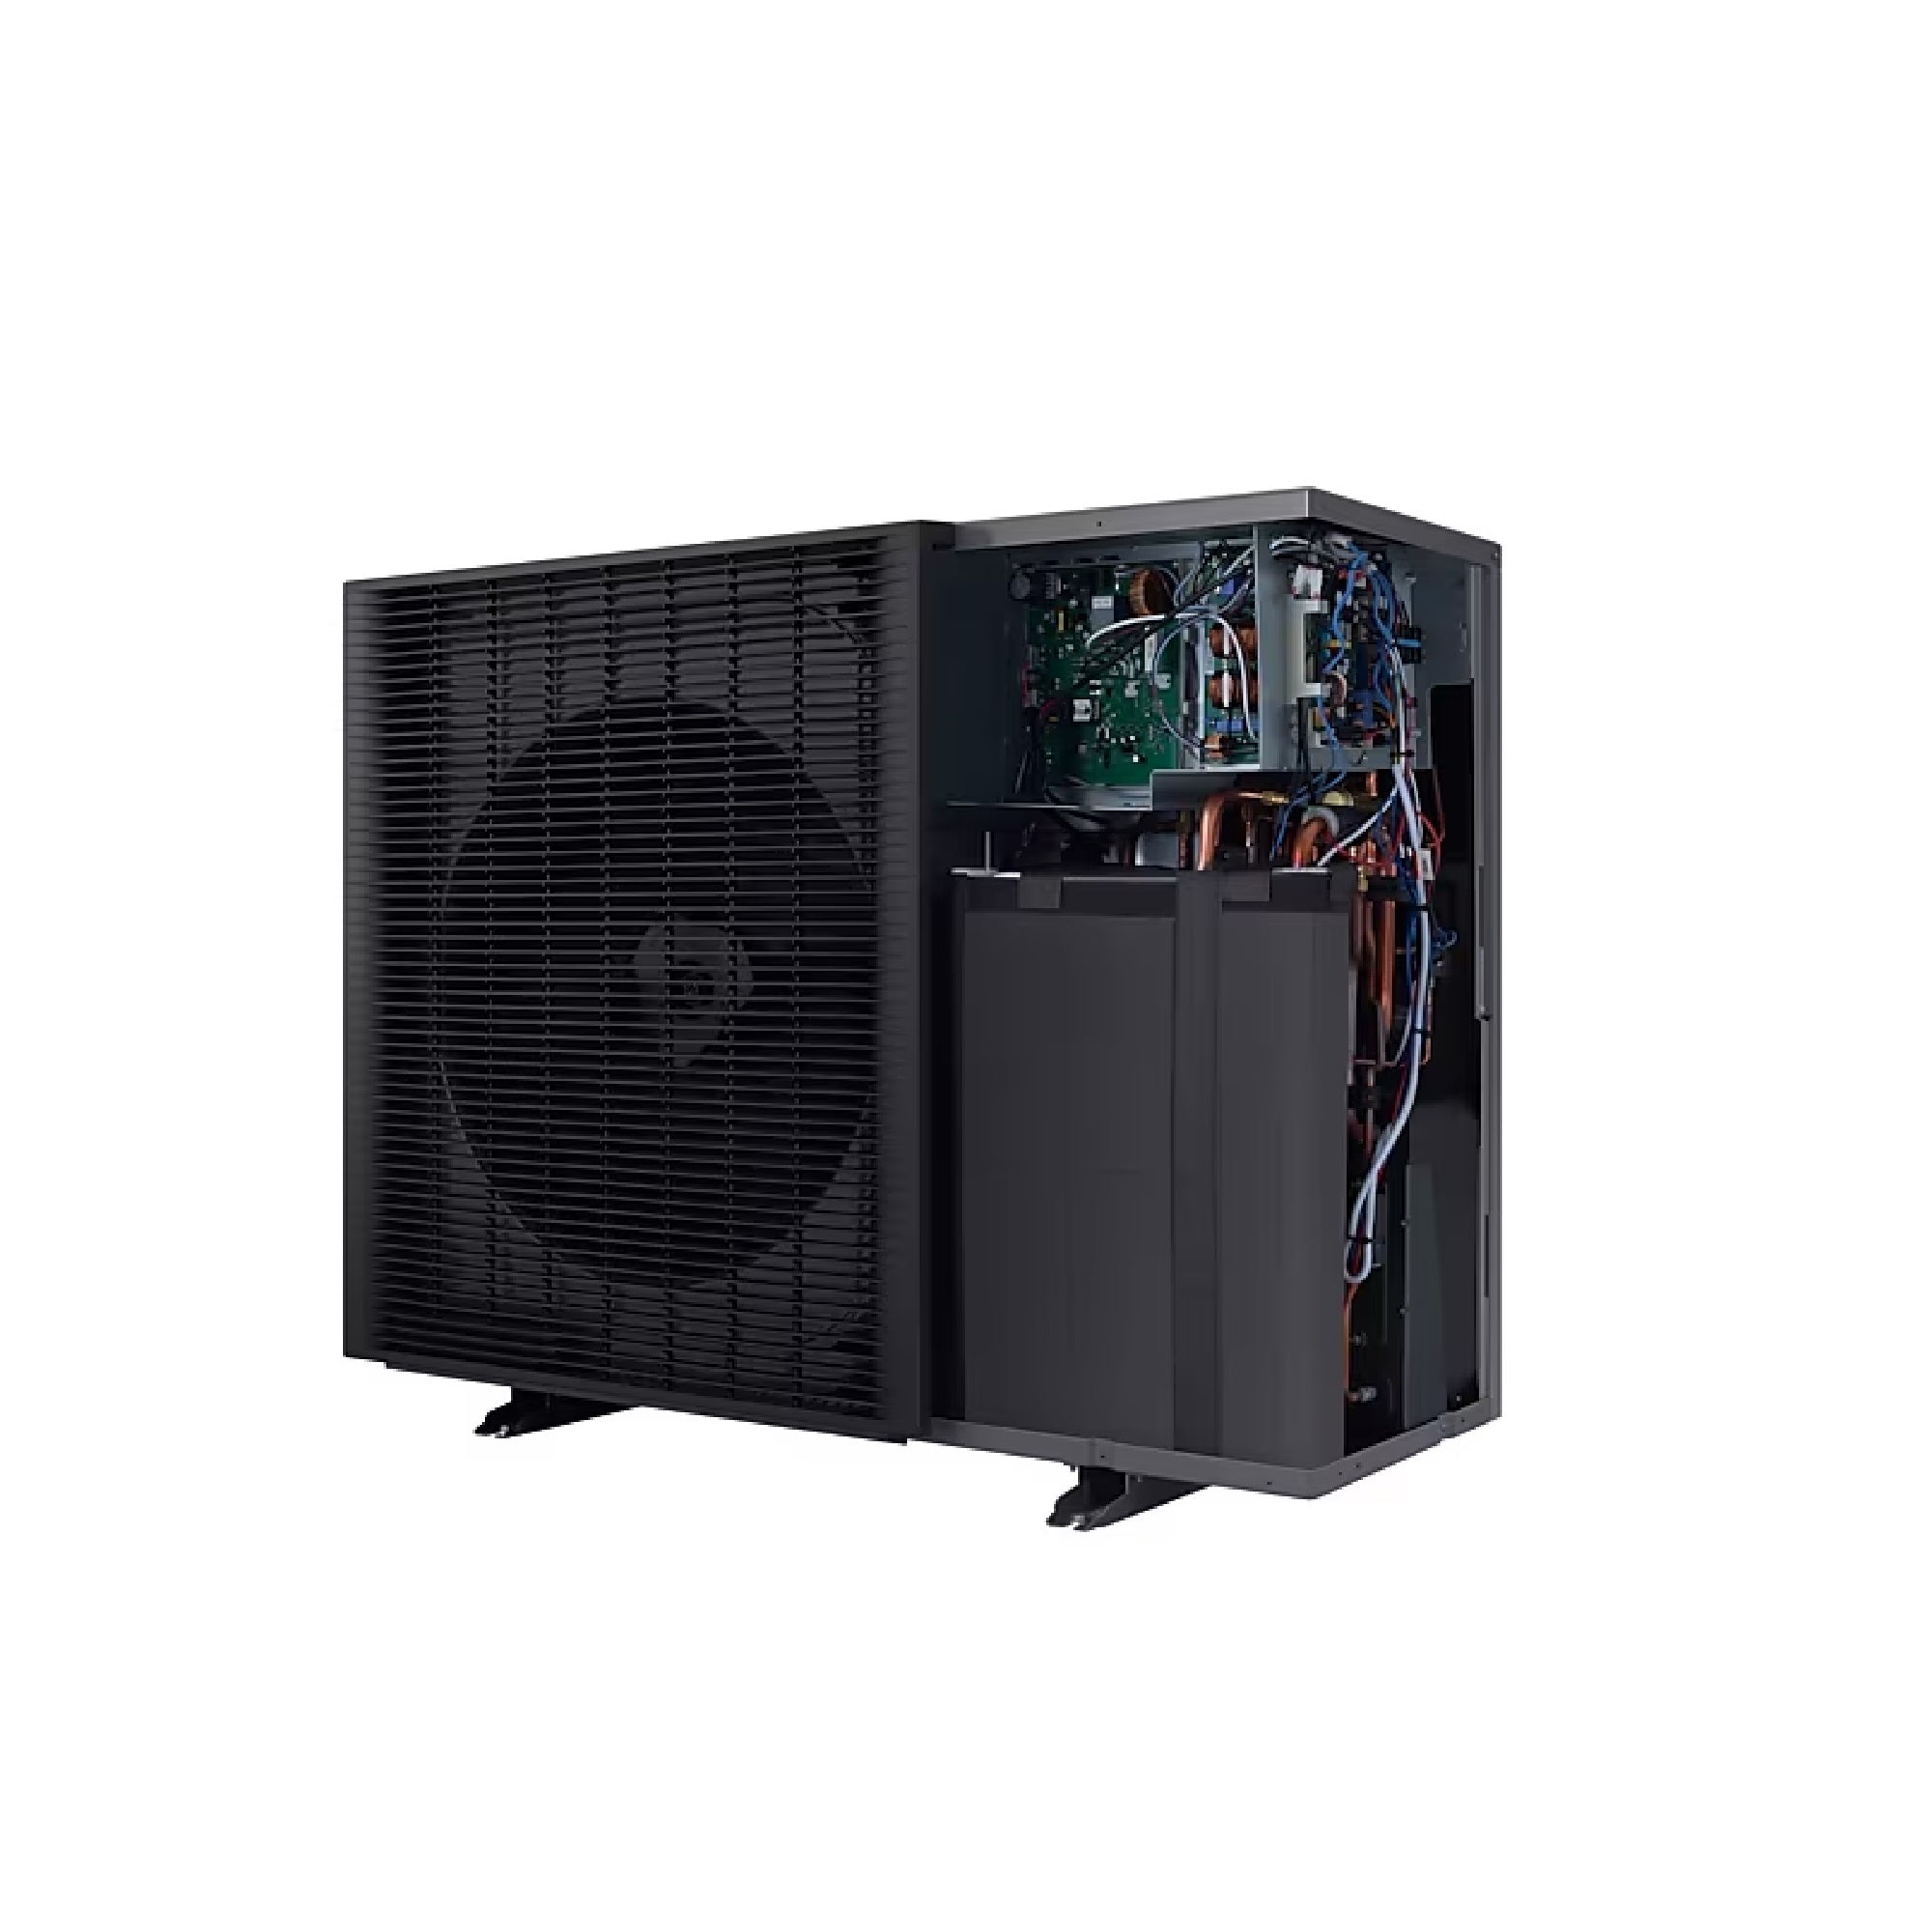 Pompa di calore aria-acqua 8 Kw monoblocco Samsung AE080BXYDEG/EU Sistema EHS Mono HT Quiet Inverter Monofase R32